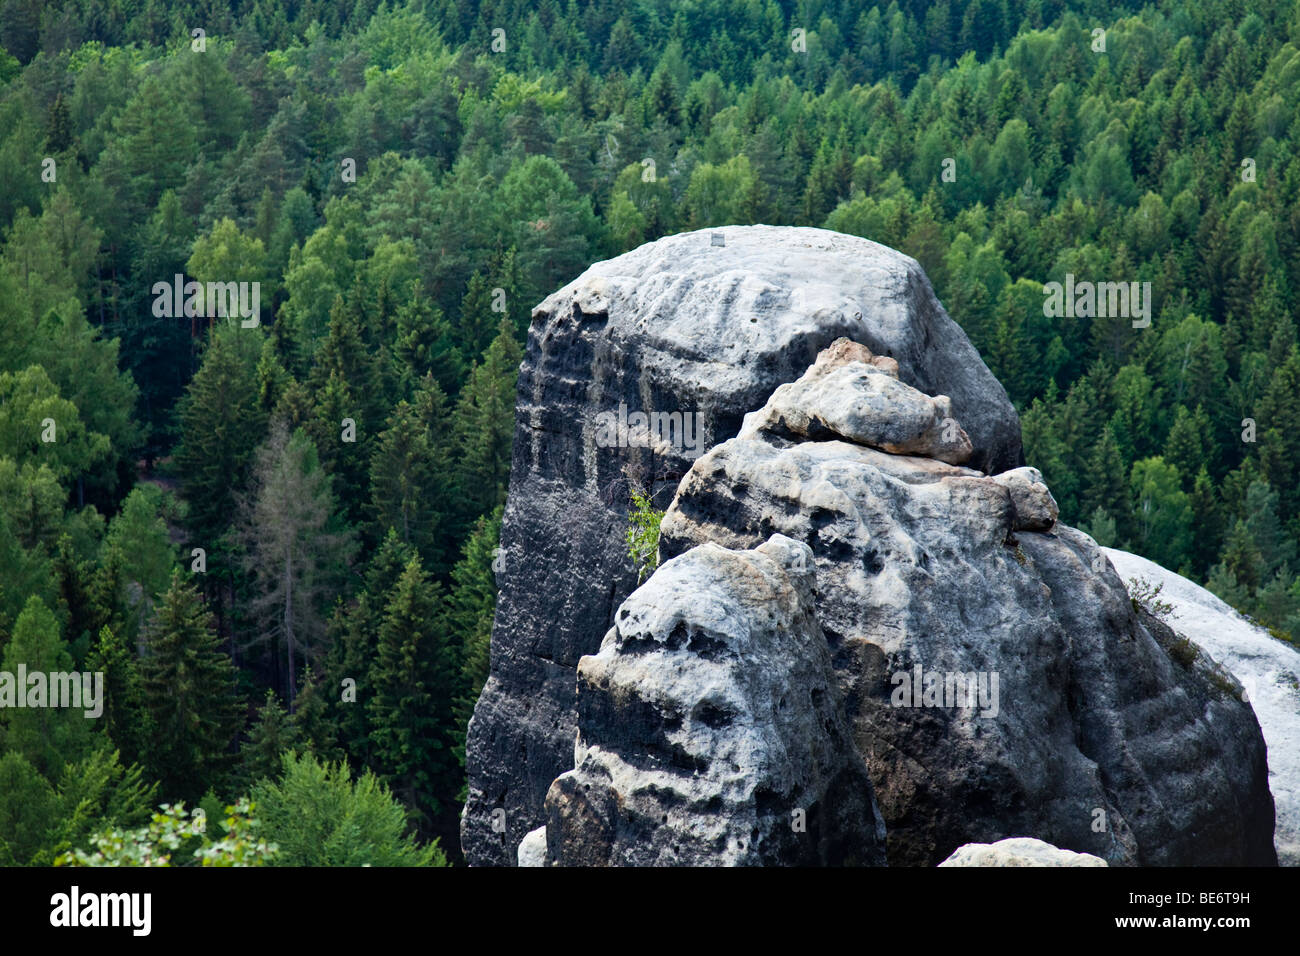 Rock and forest in the national park "Sächsische Schweiz", Germany Stock Photo